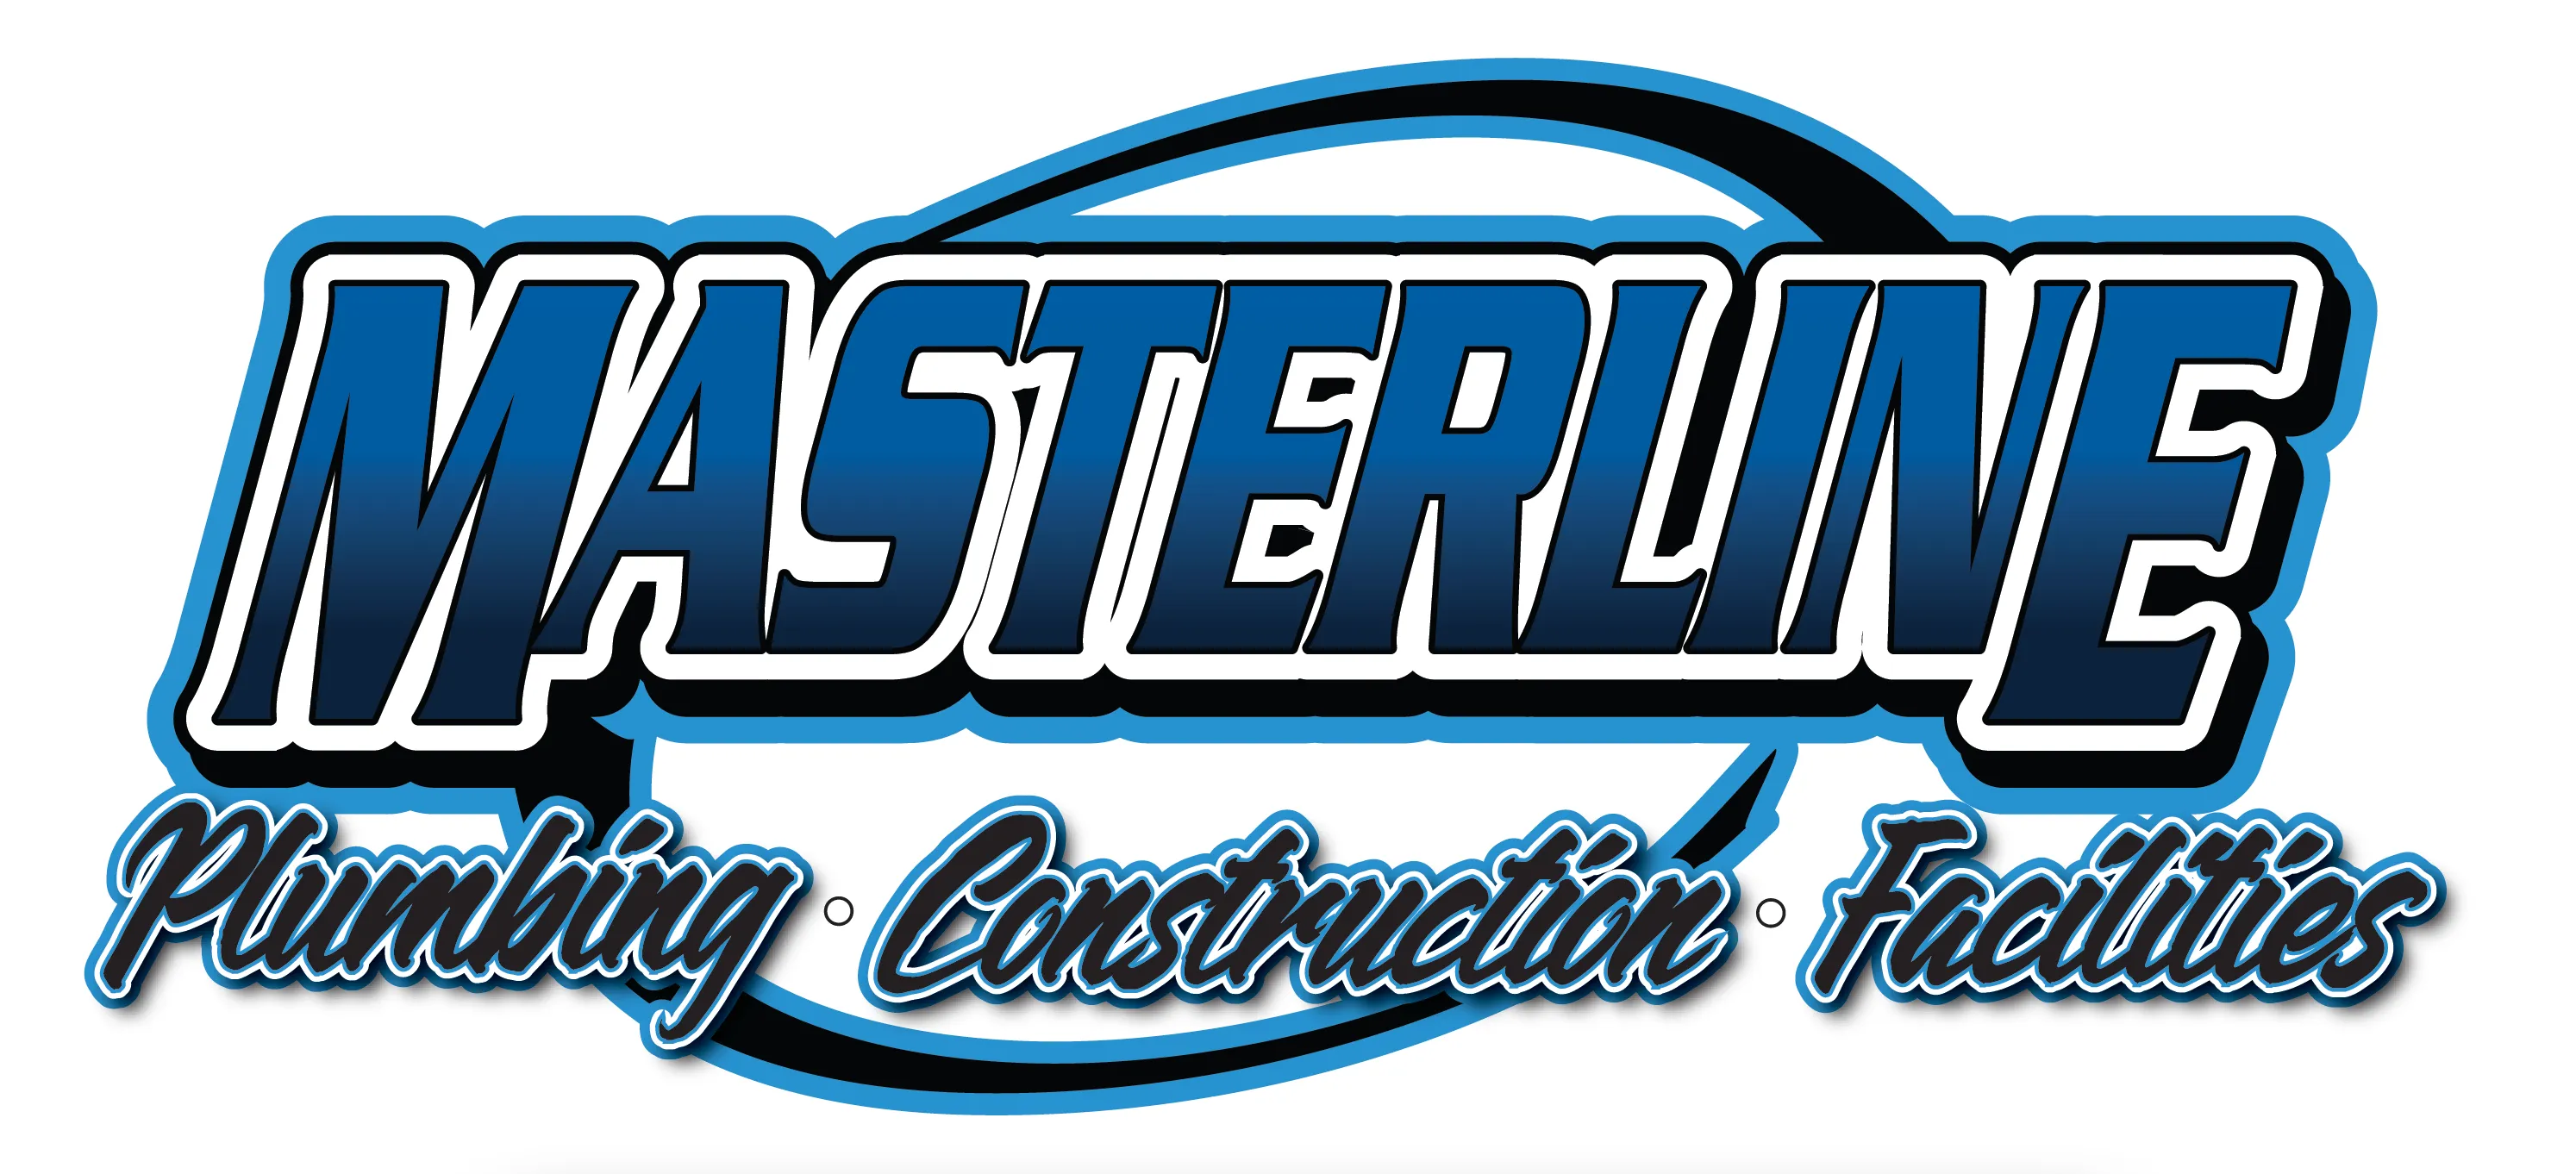 Masterline Logo